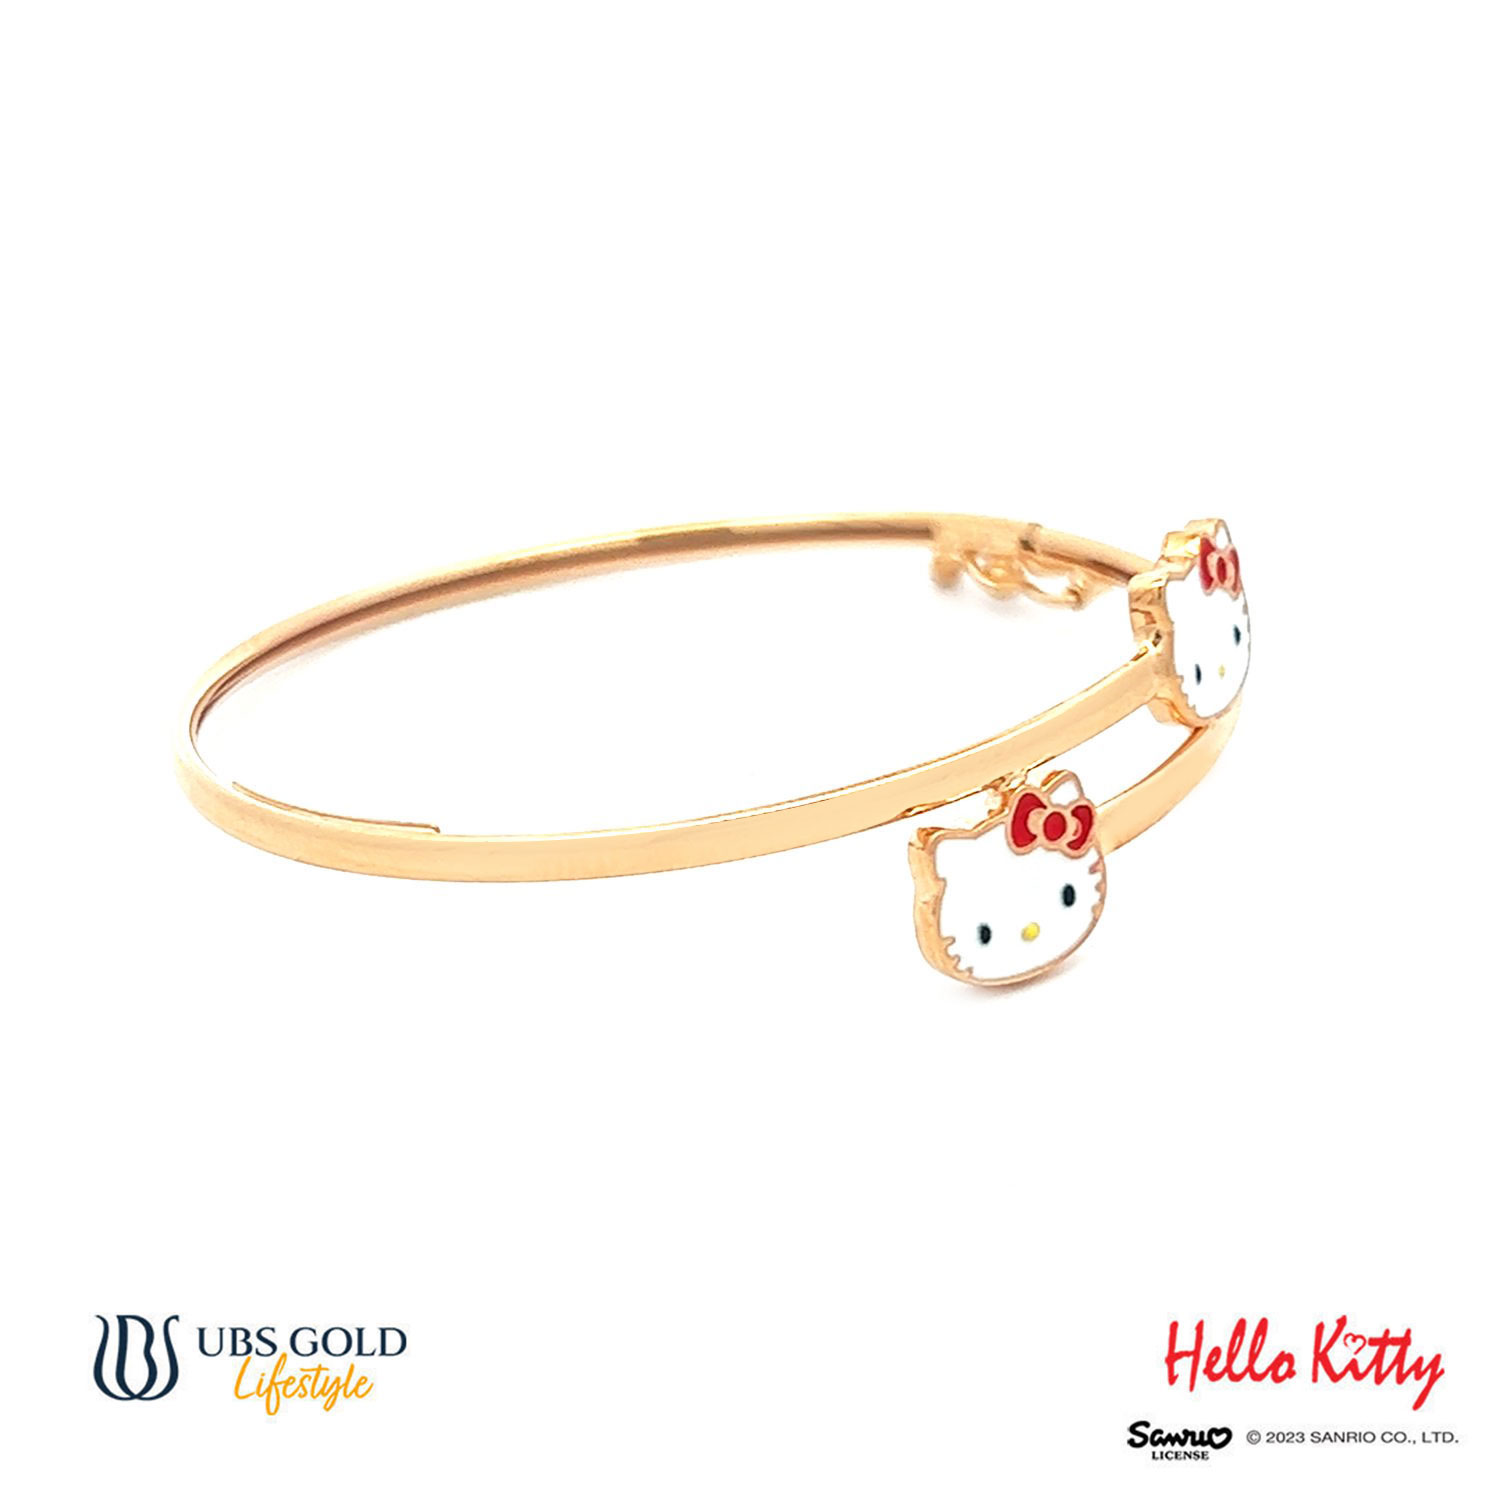 UBS Gold Gelang Emas Bayi Sanrio Hello Kitty - Vgz0041 - 17K